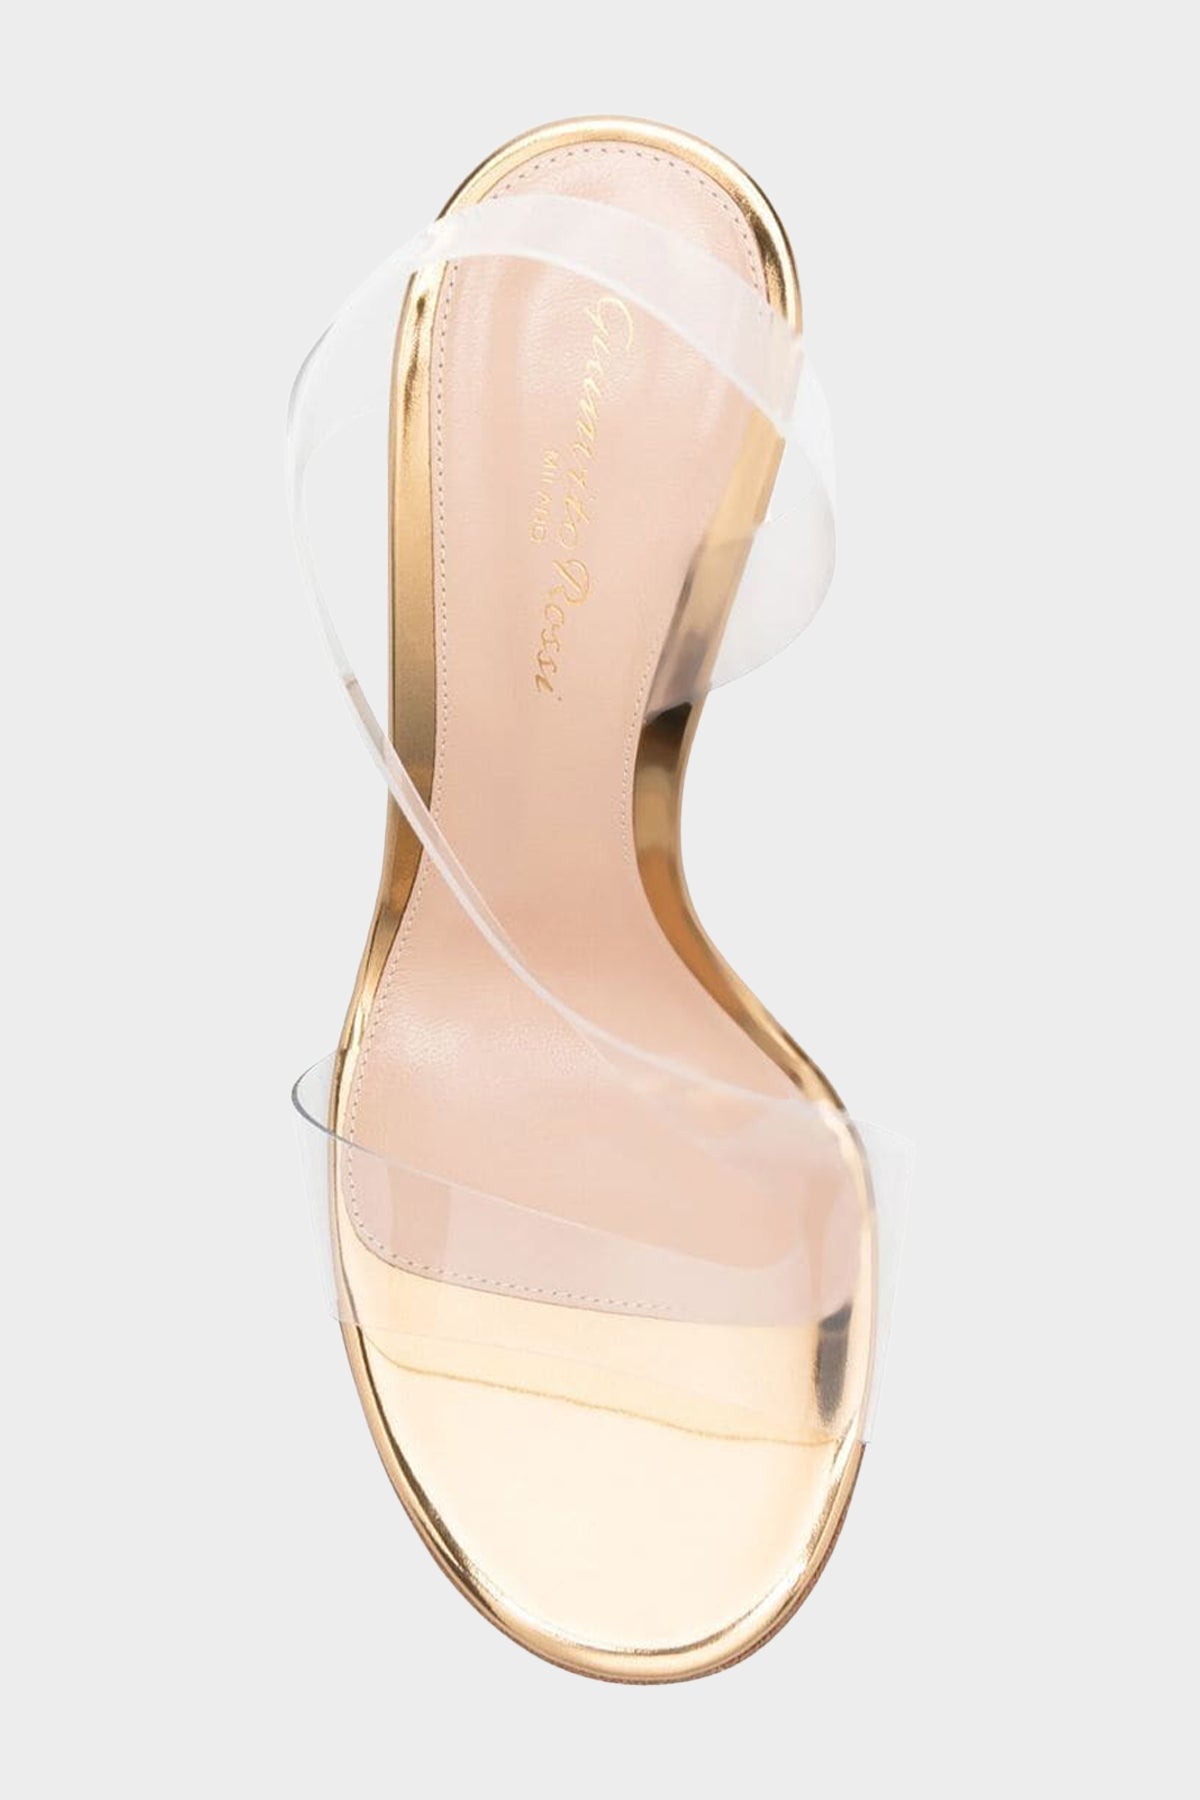 Glass Vernice Sandals 95 in Gold - shop-olivia.com